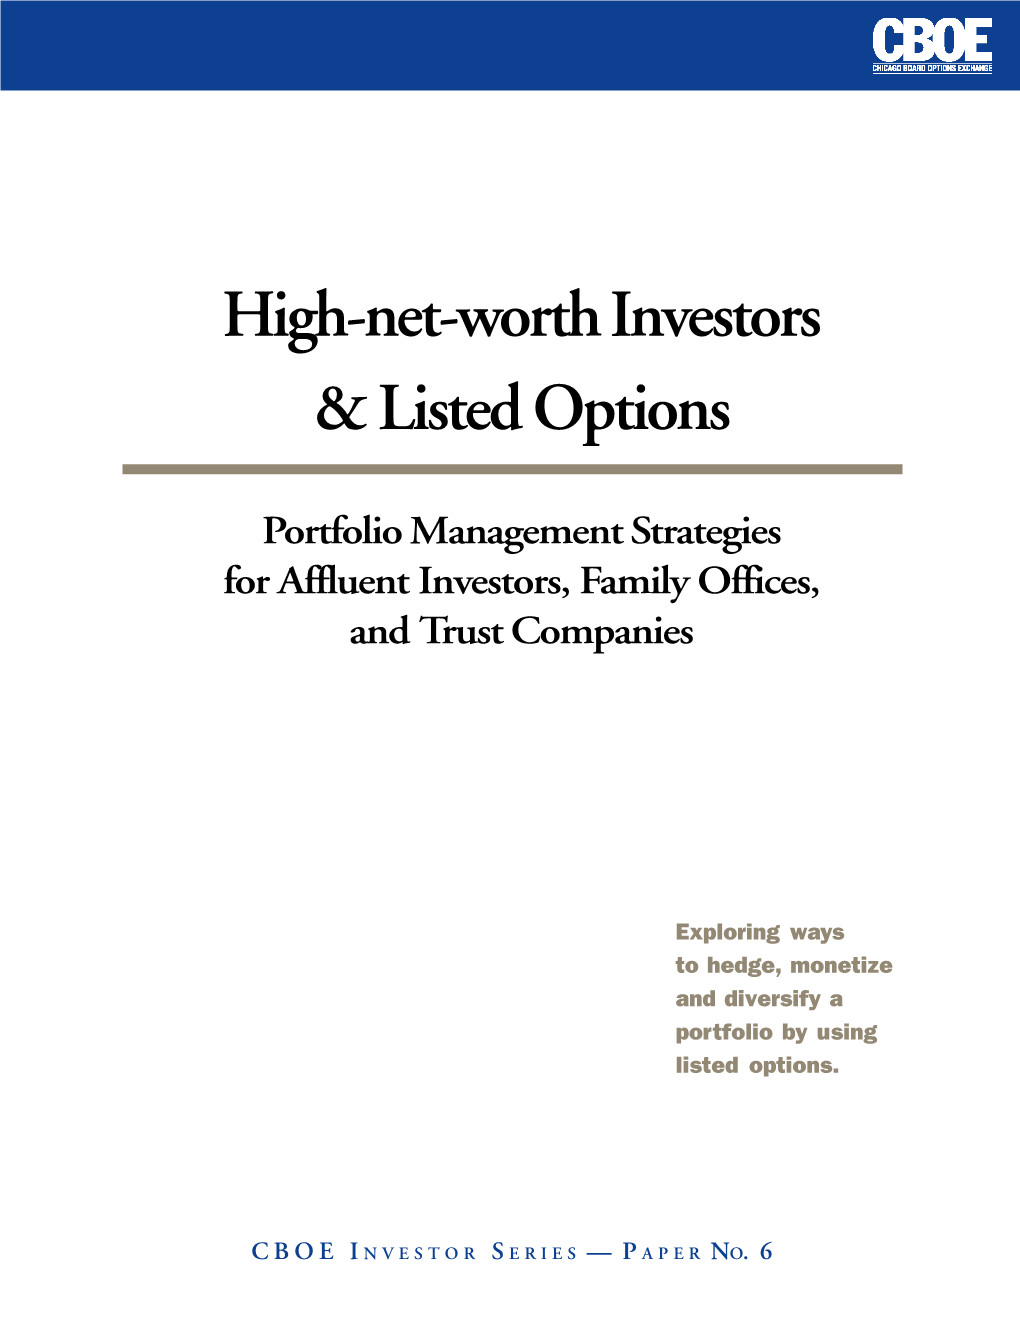 High-Net-Worth Investors & Listed Options